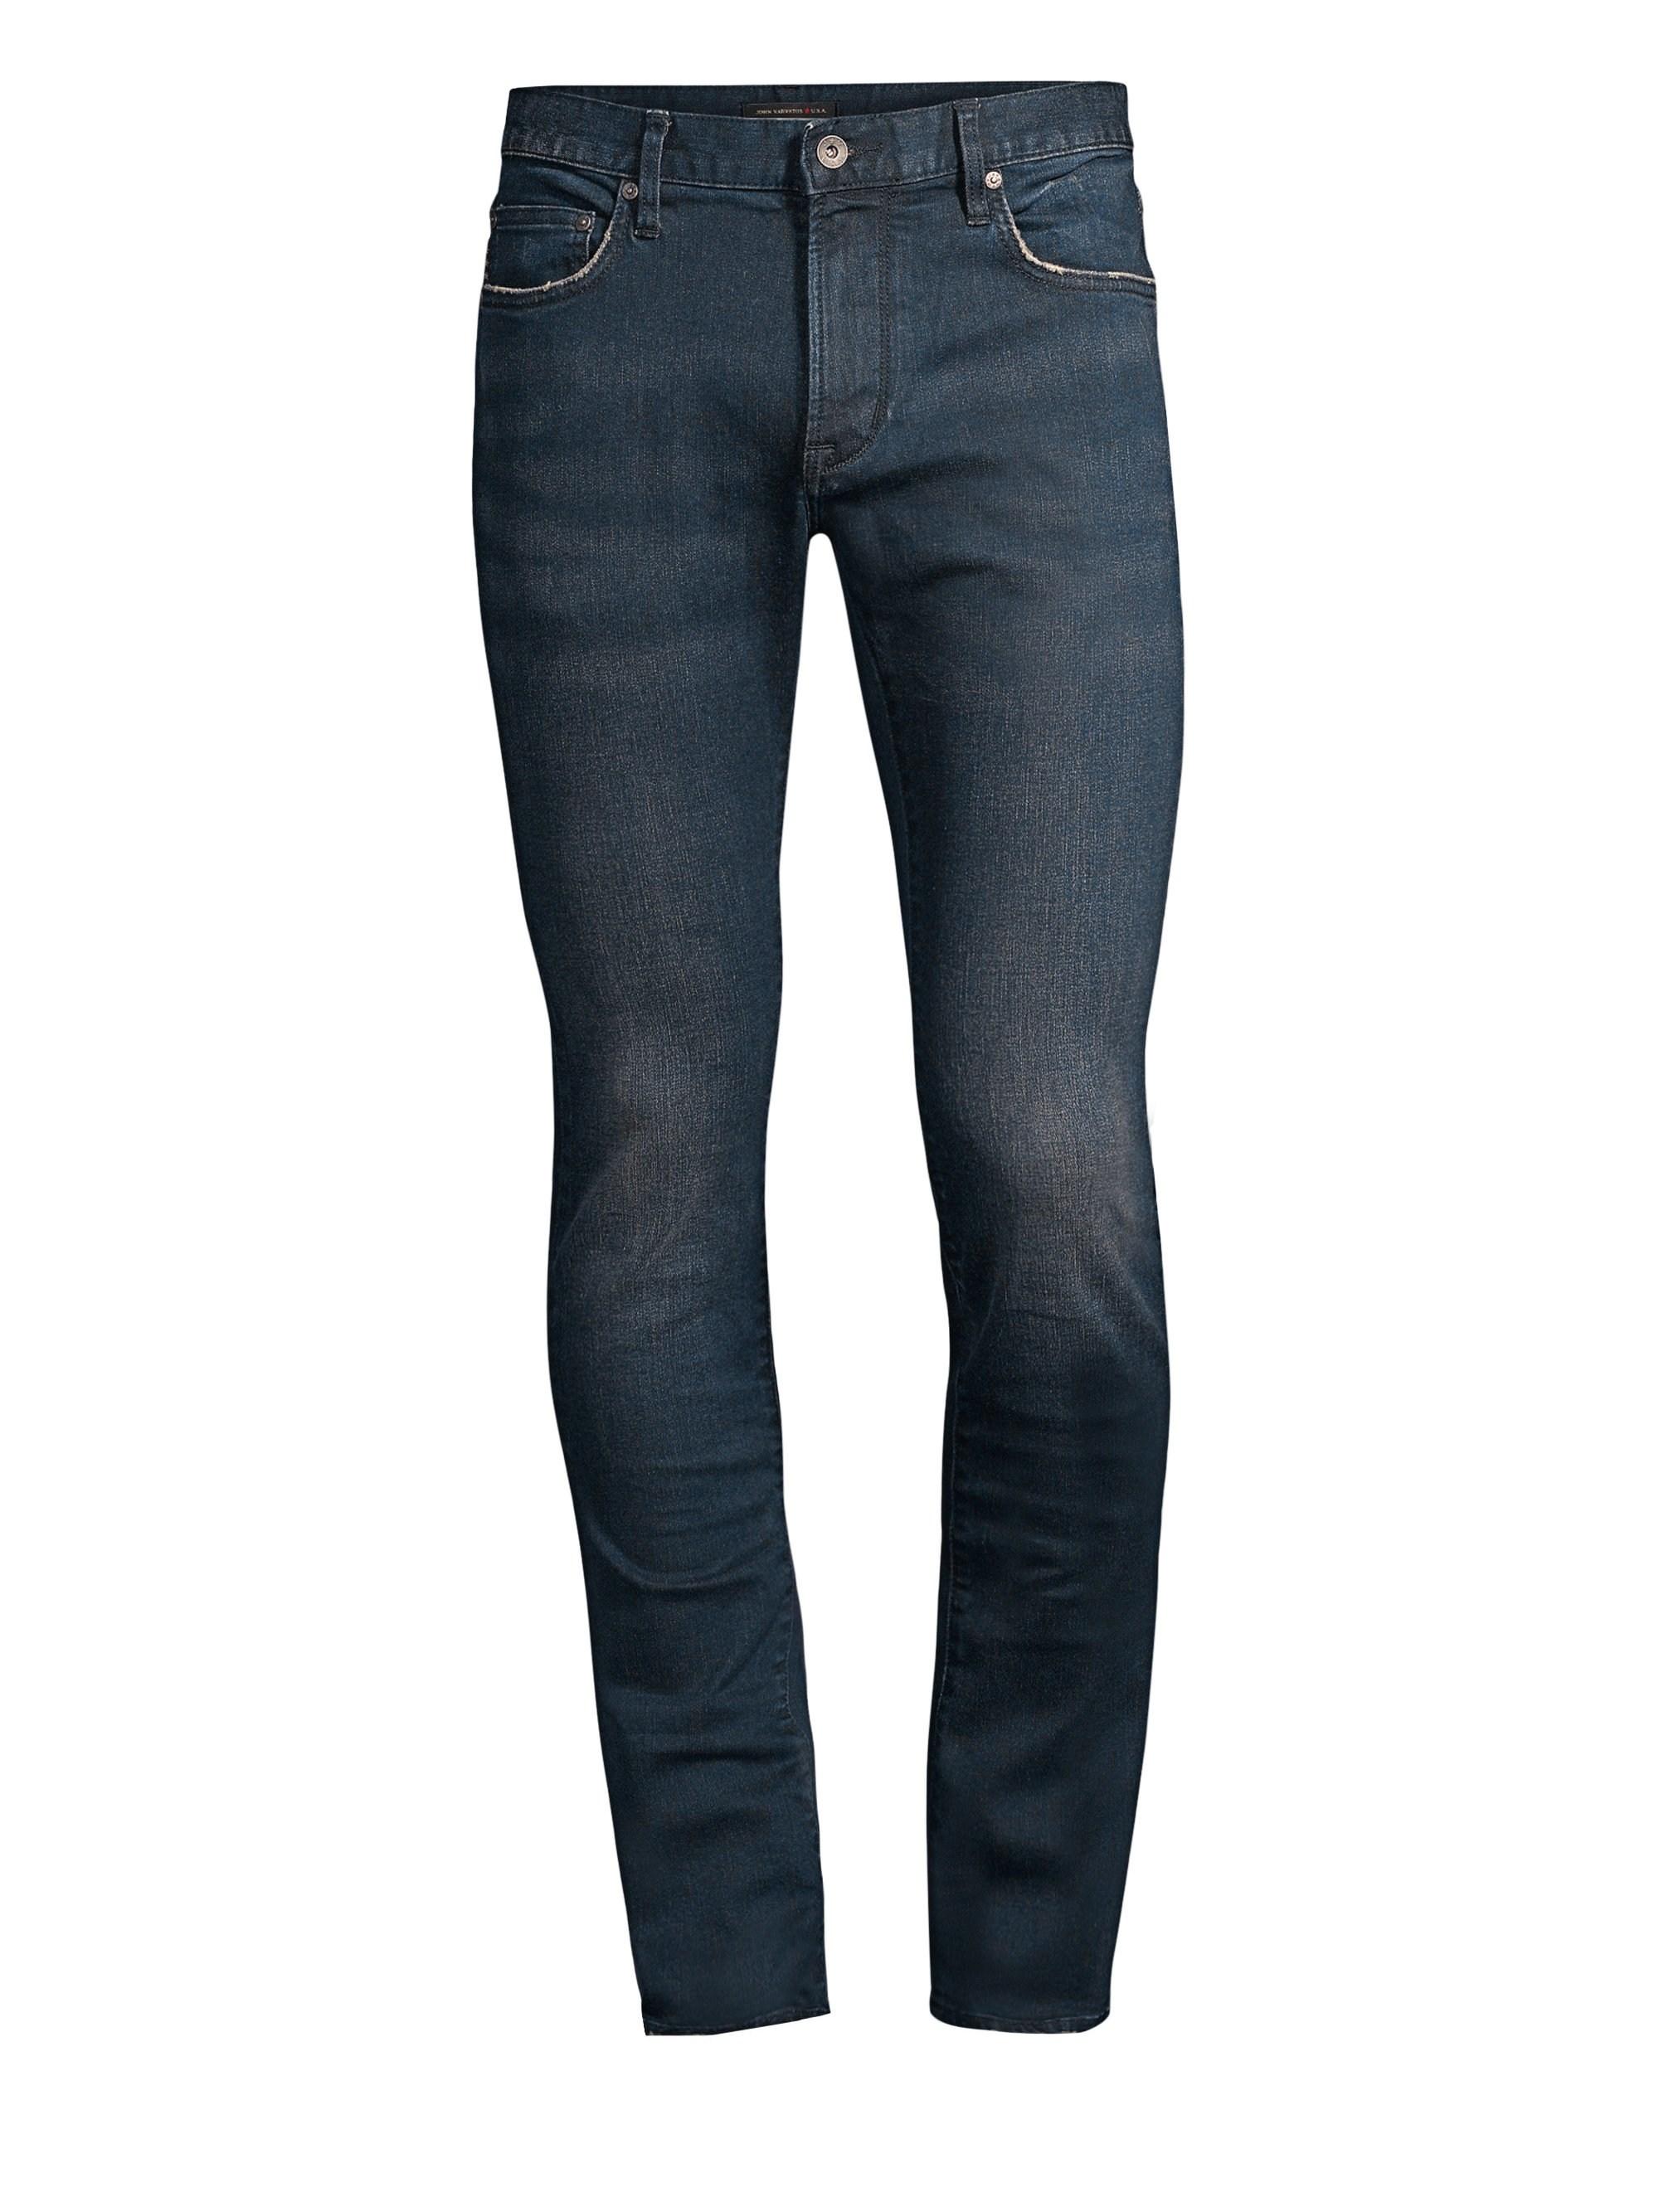 Lyst - John Varvatos Men's Distressed Stretch Slim Jeans - Dark Indigo ...